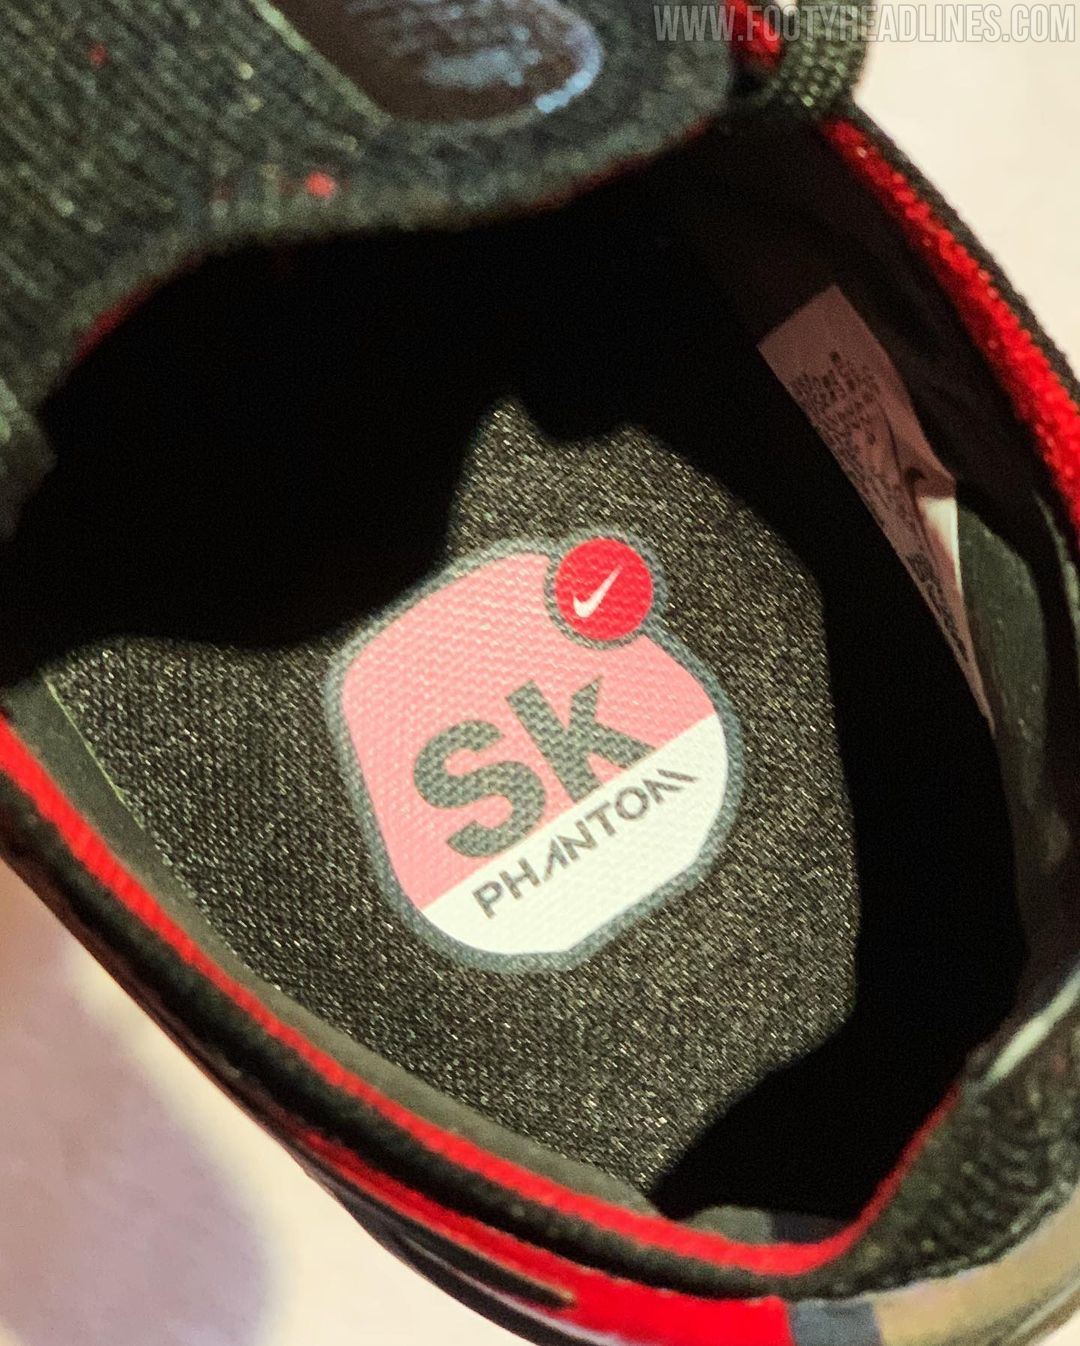 SK Phantom: Skepta and Nike drop a football boot